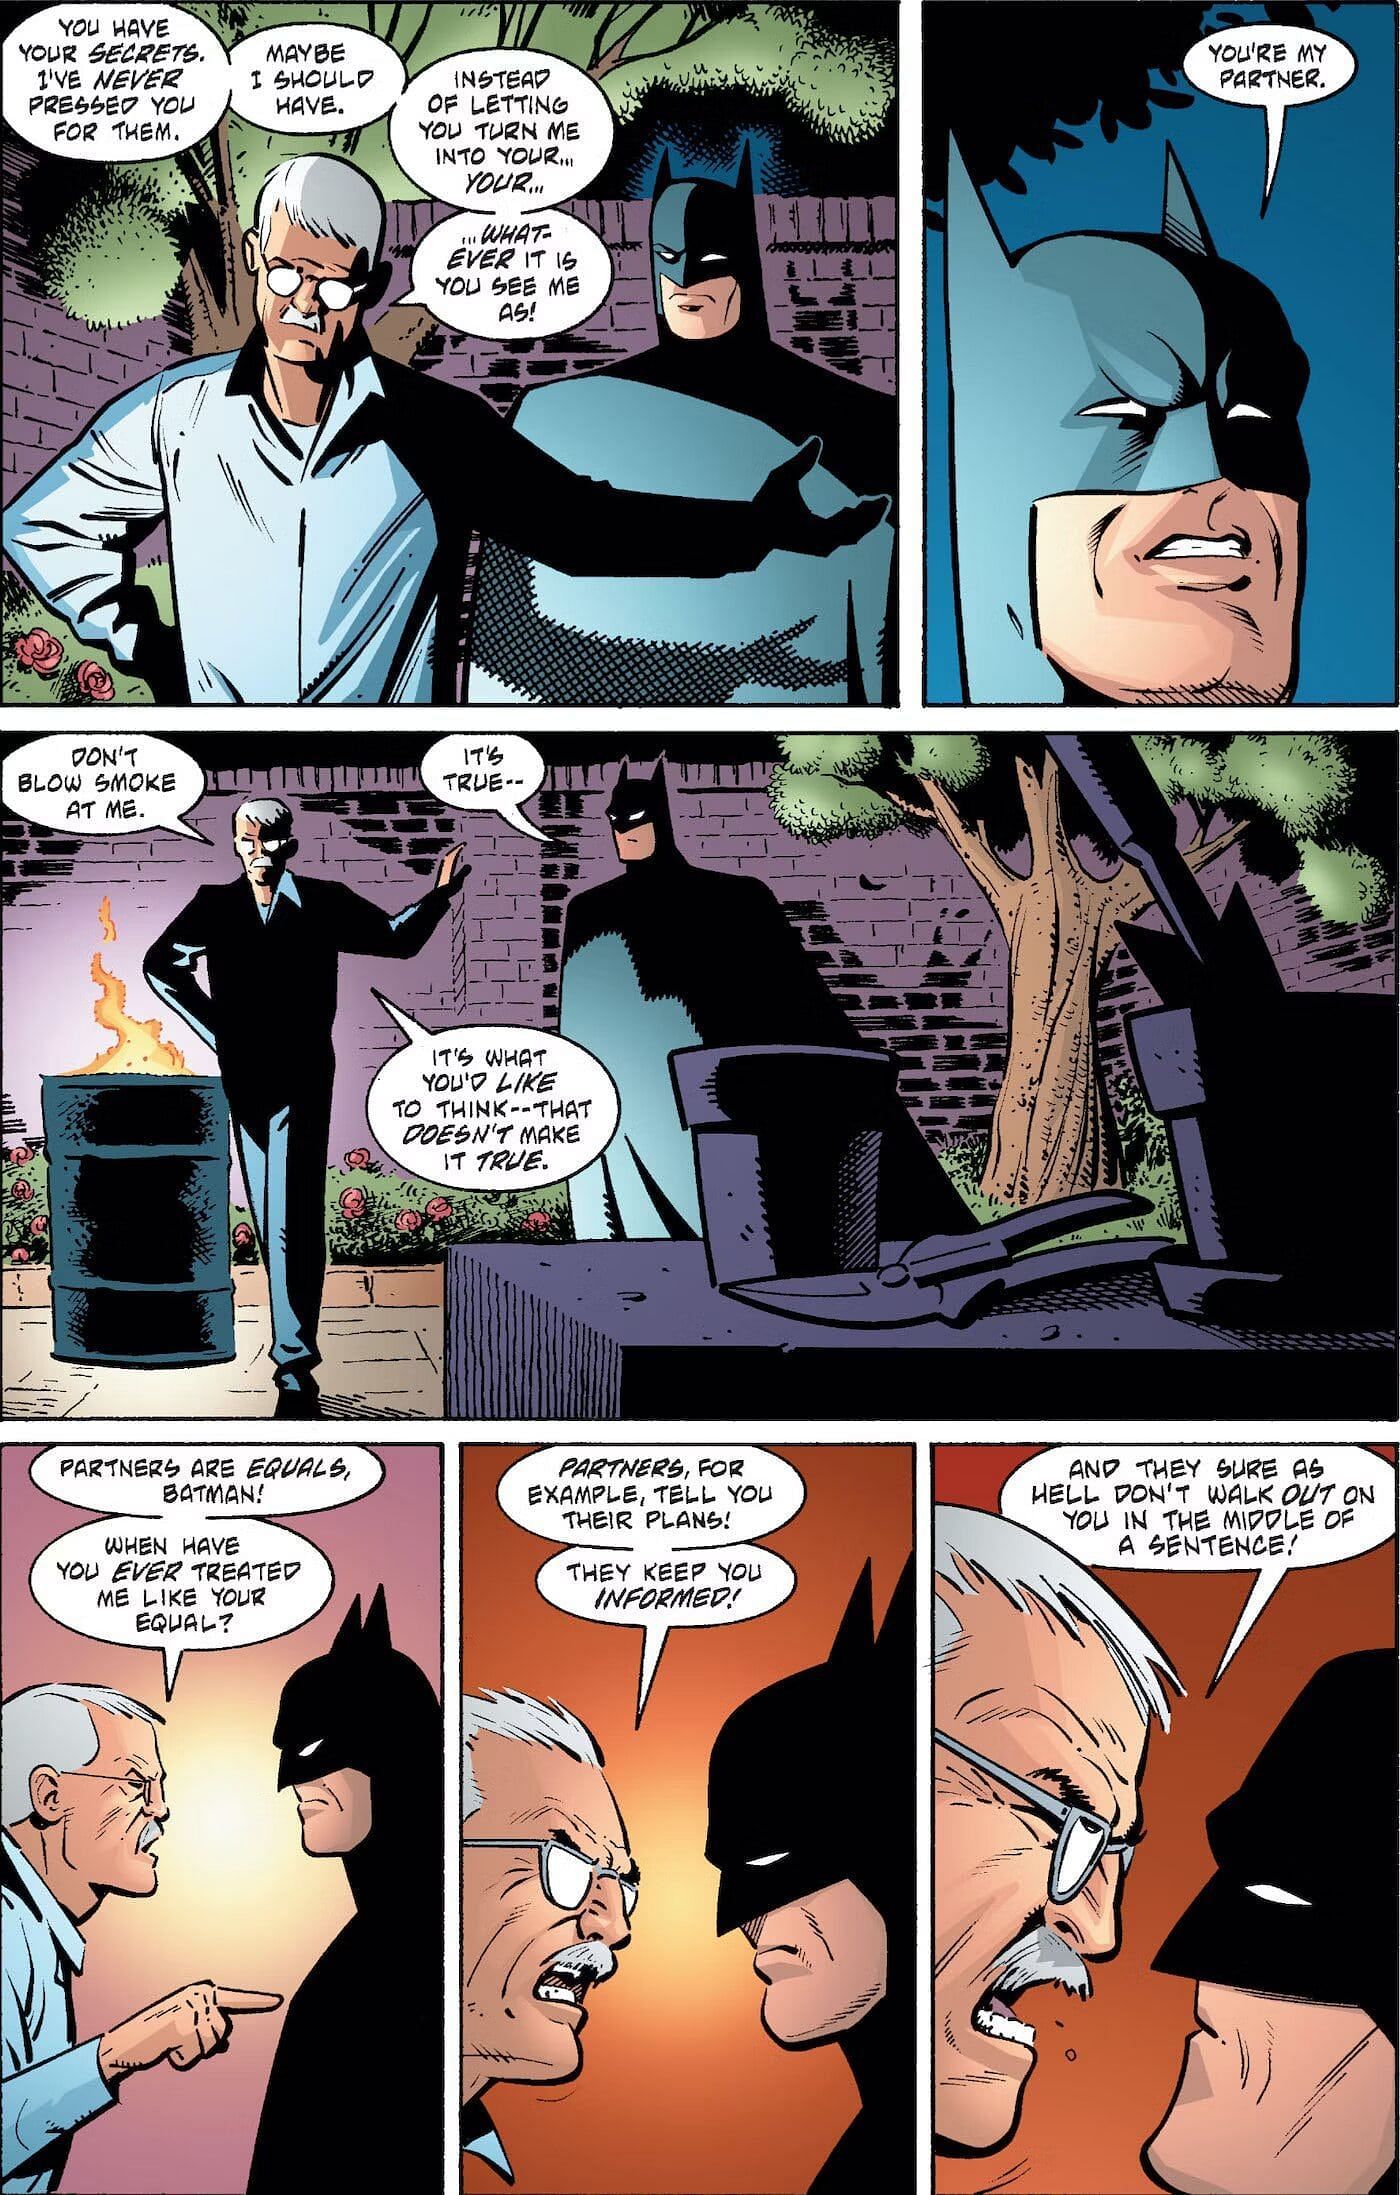 Batman and Commissioner Gordon argue about the former&#039;s vanishing trick (Image via DC Comics)